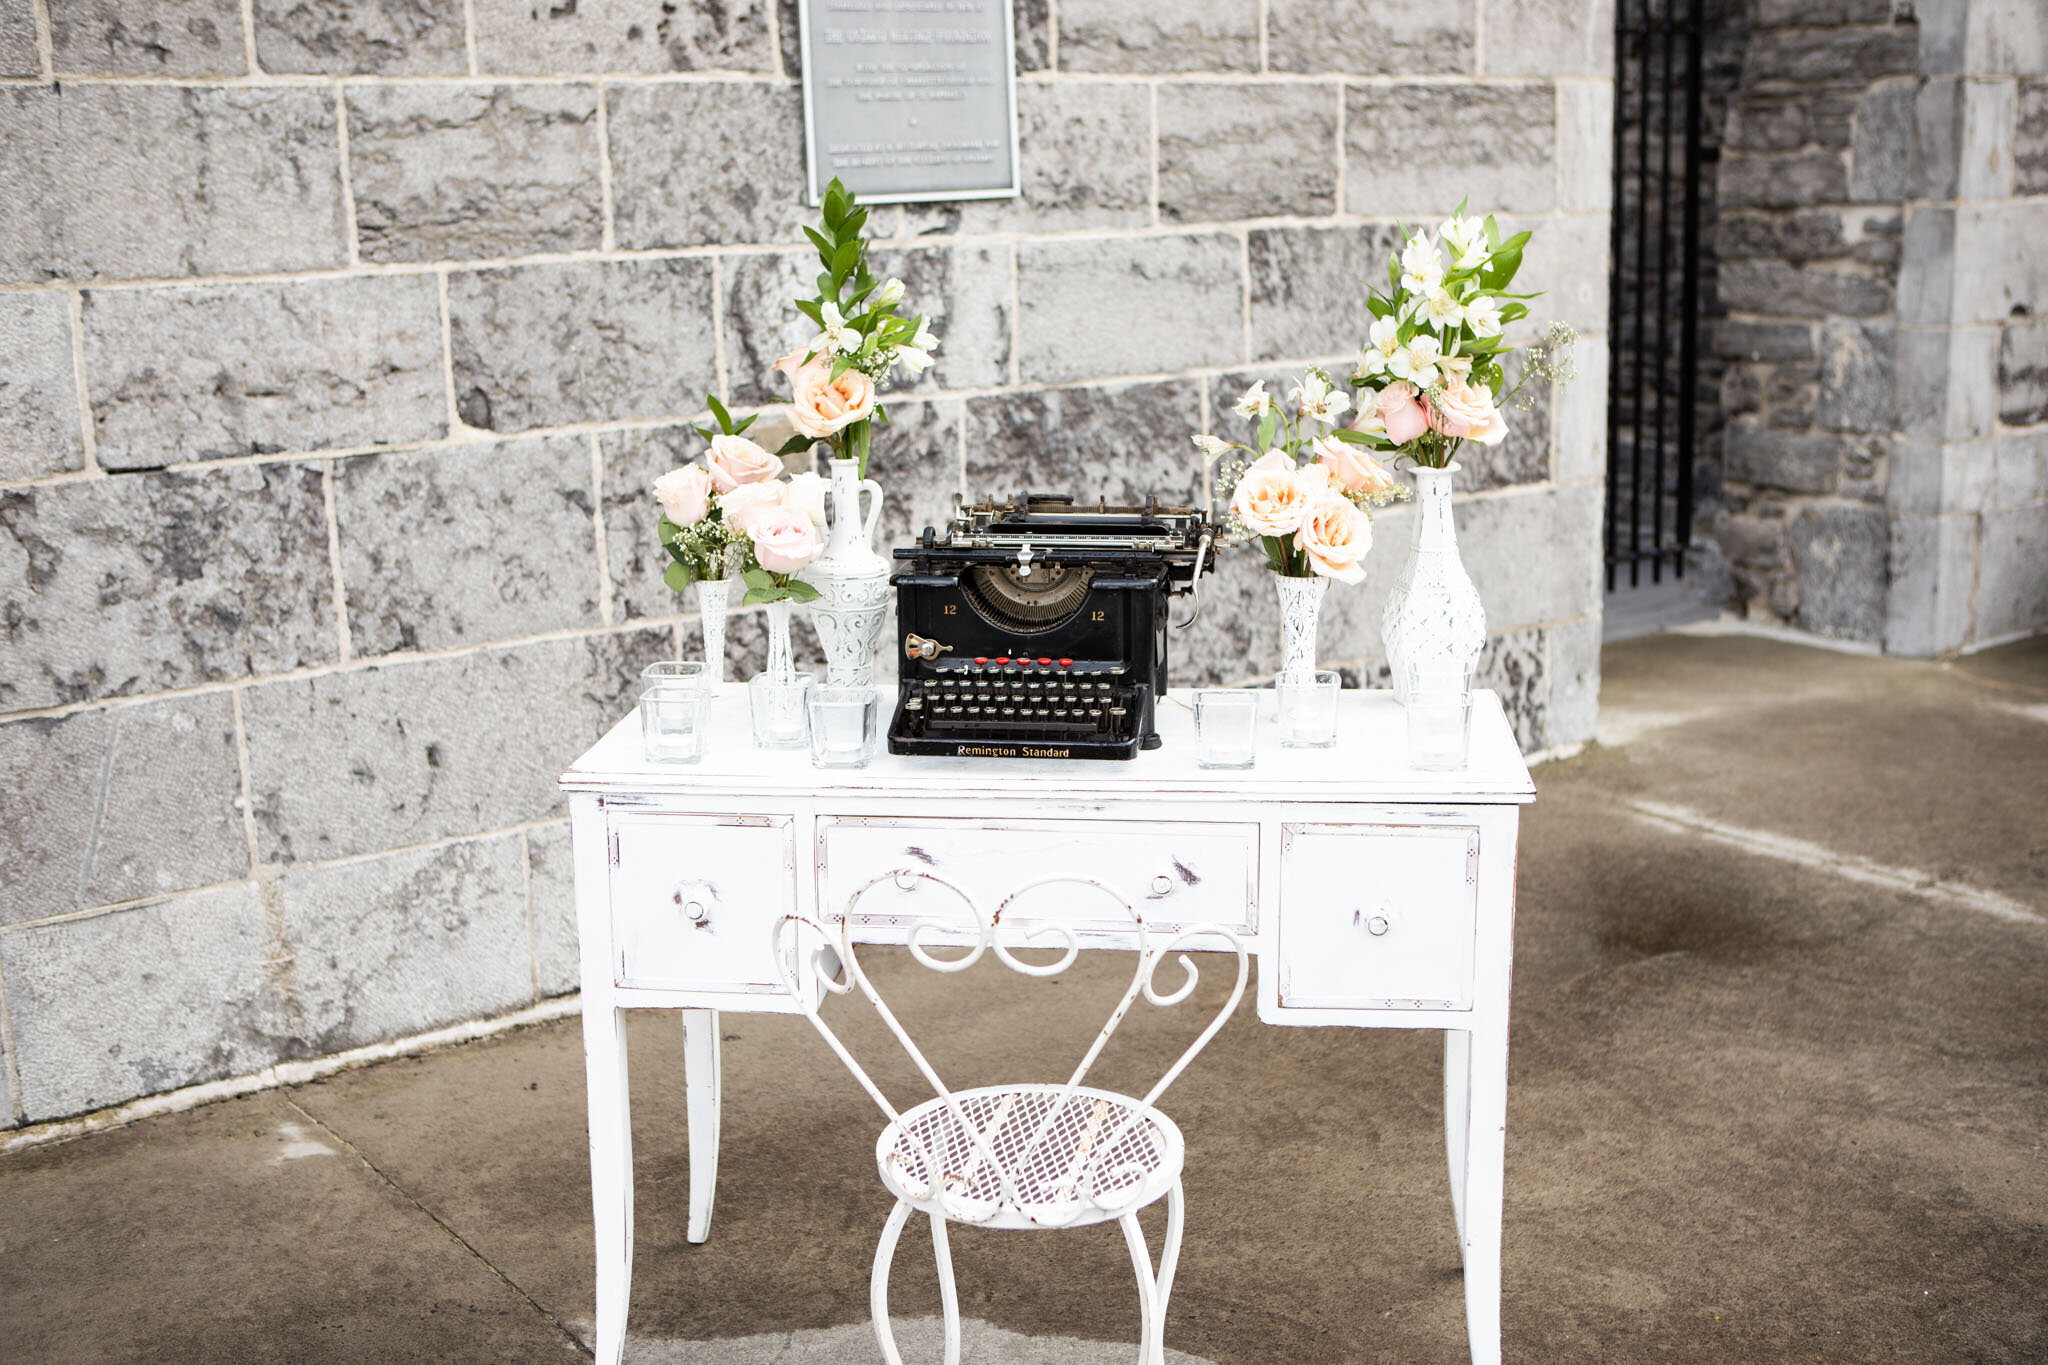 typewriter and desk wedding decorations at St Raphael's ruins.jpg